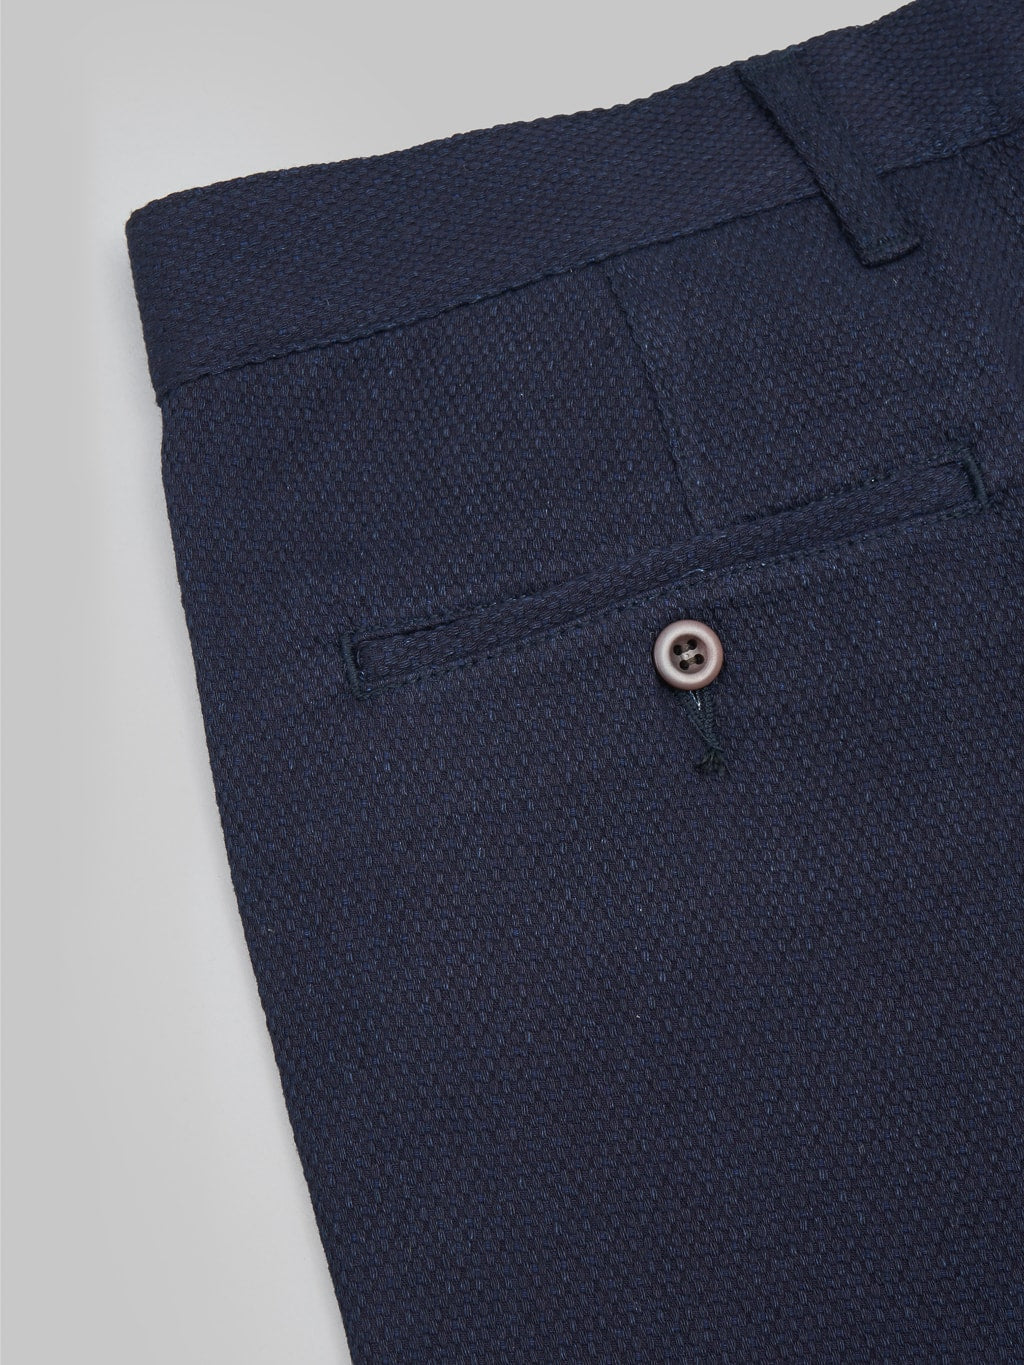 Japan Blue sashiko indigo jacquard shorts button pocket